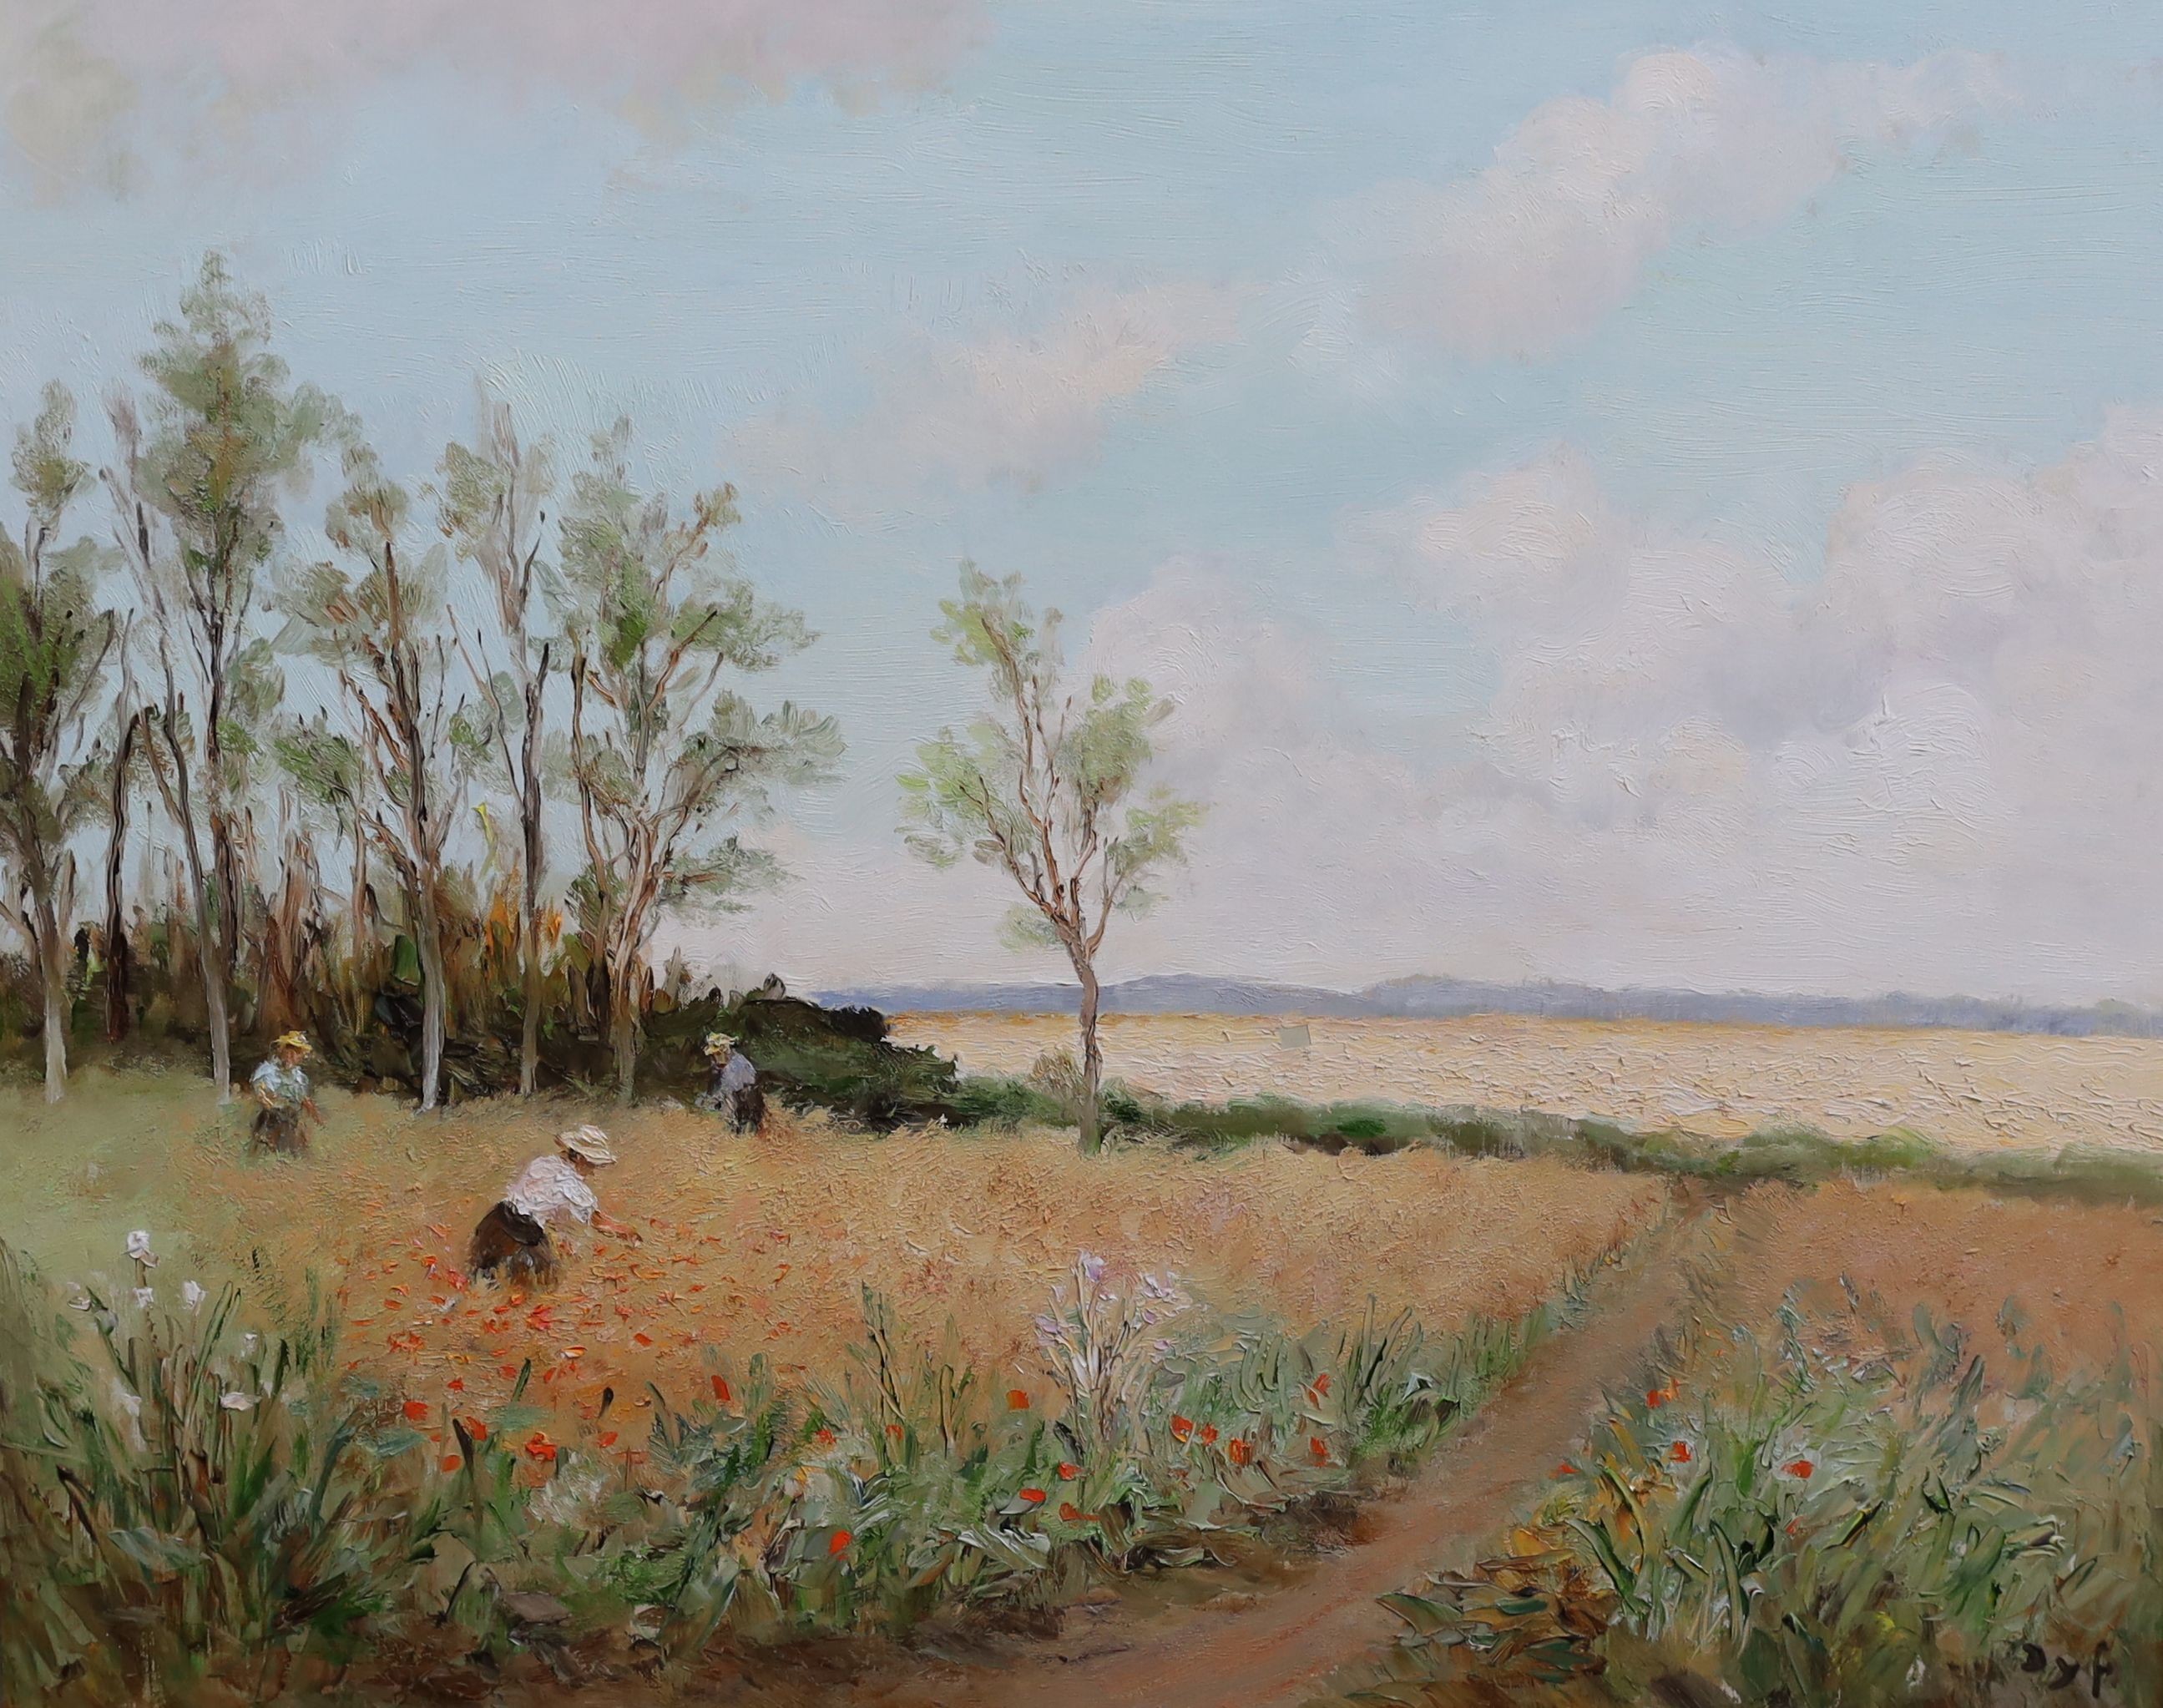 Marcel Dyf (French, 1899-1985), 'Ceuilleuses en Bretagne', oil on canvas, 58 x 71cm